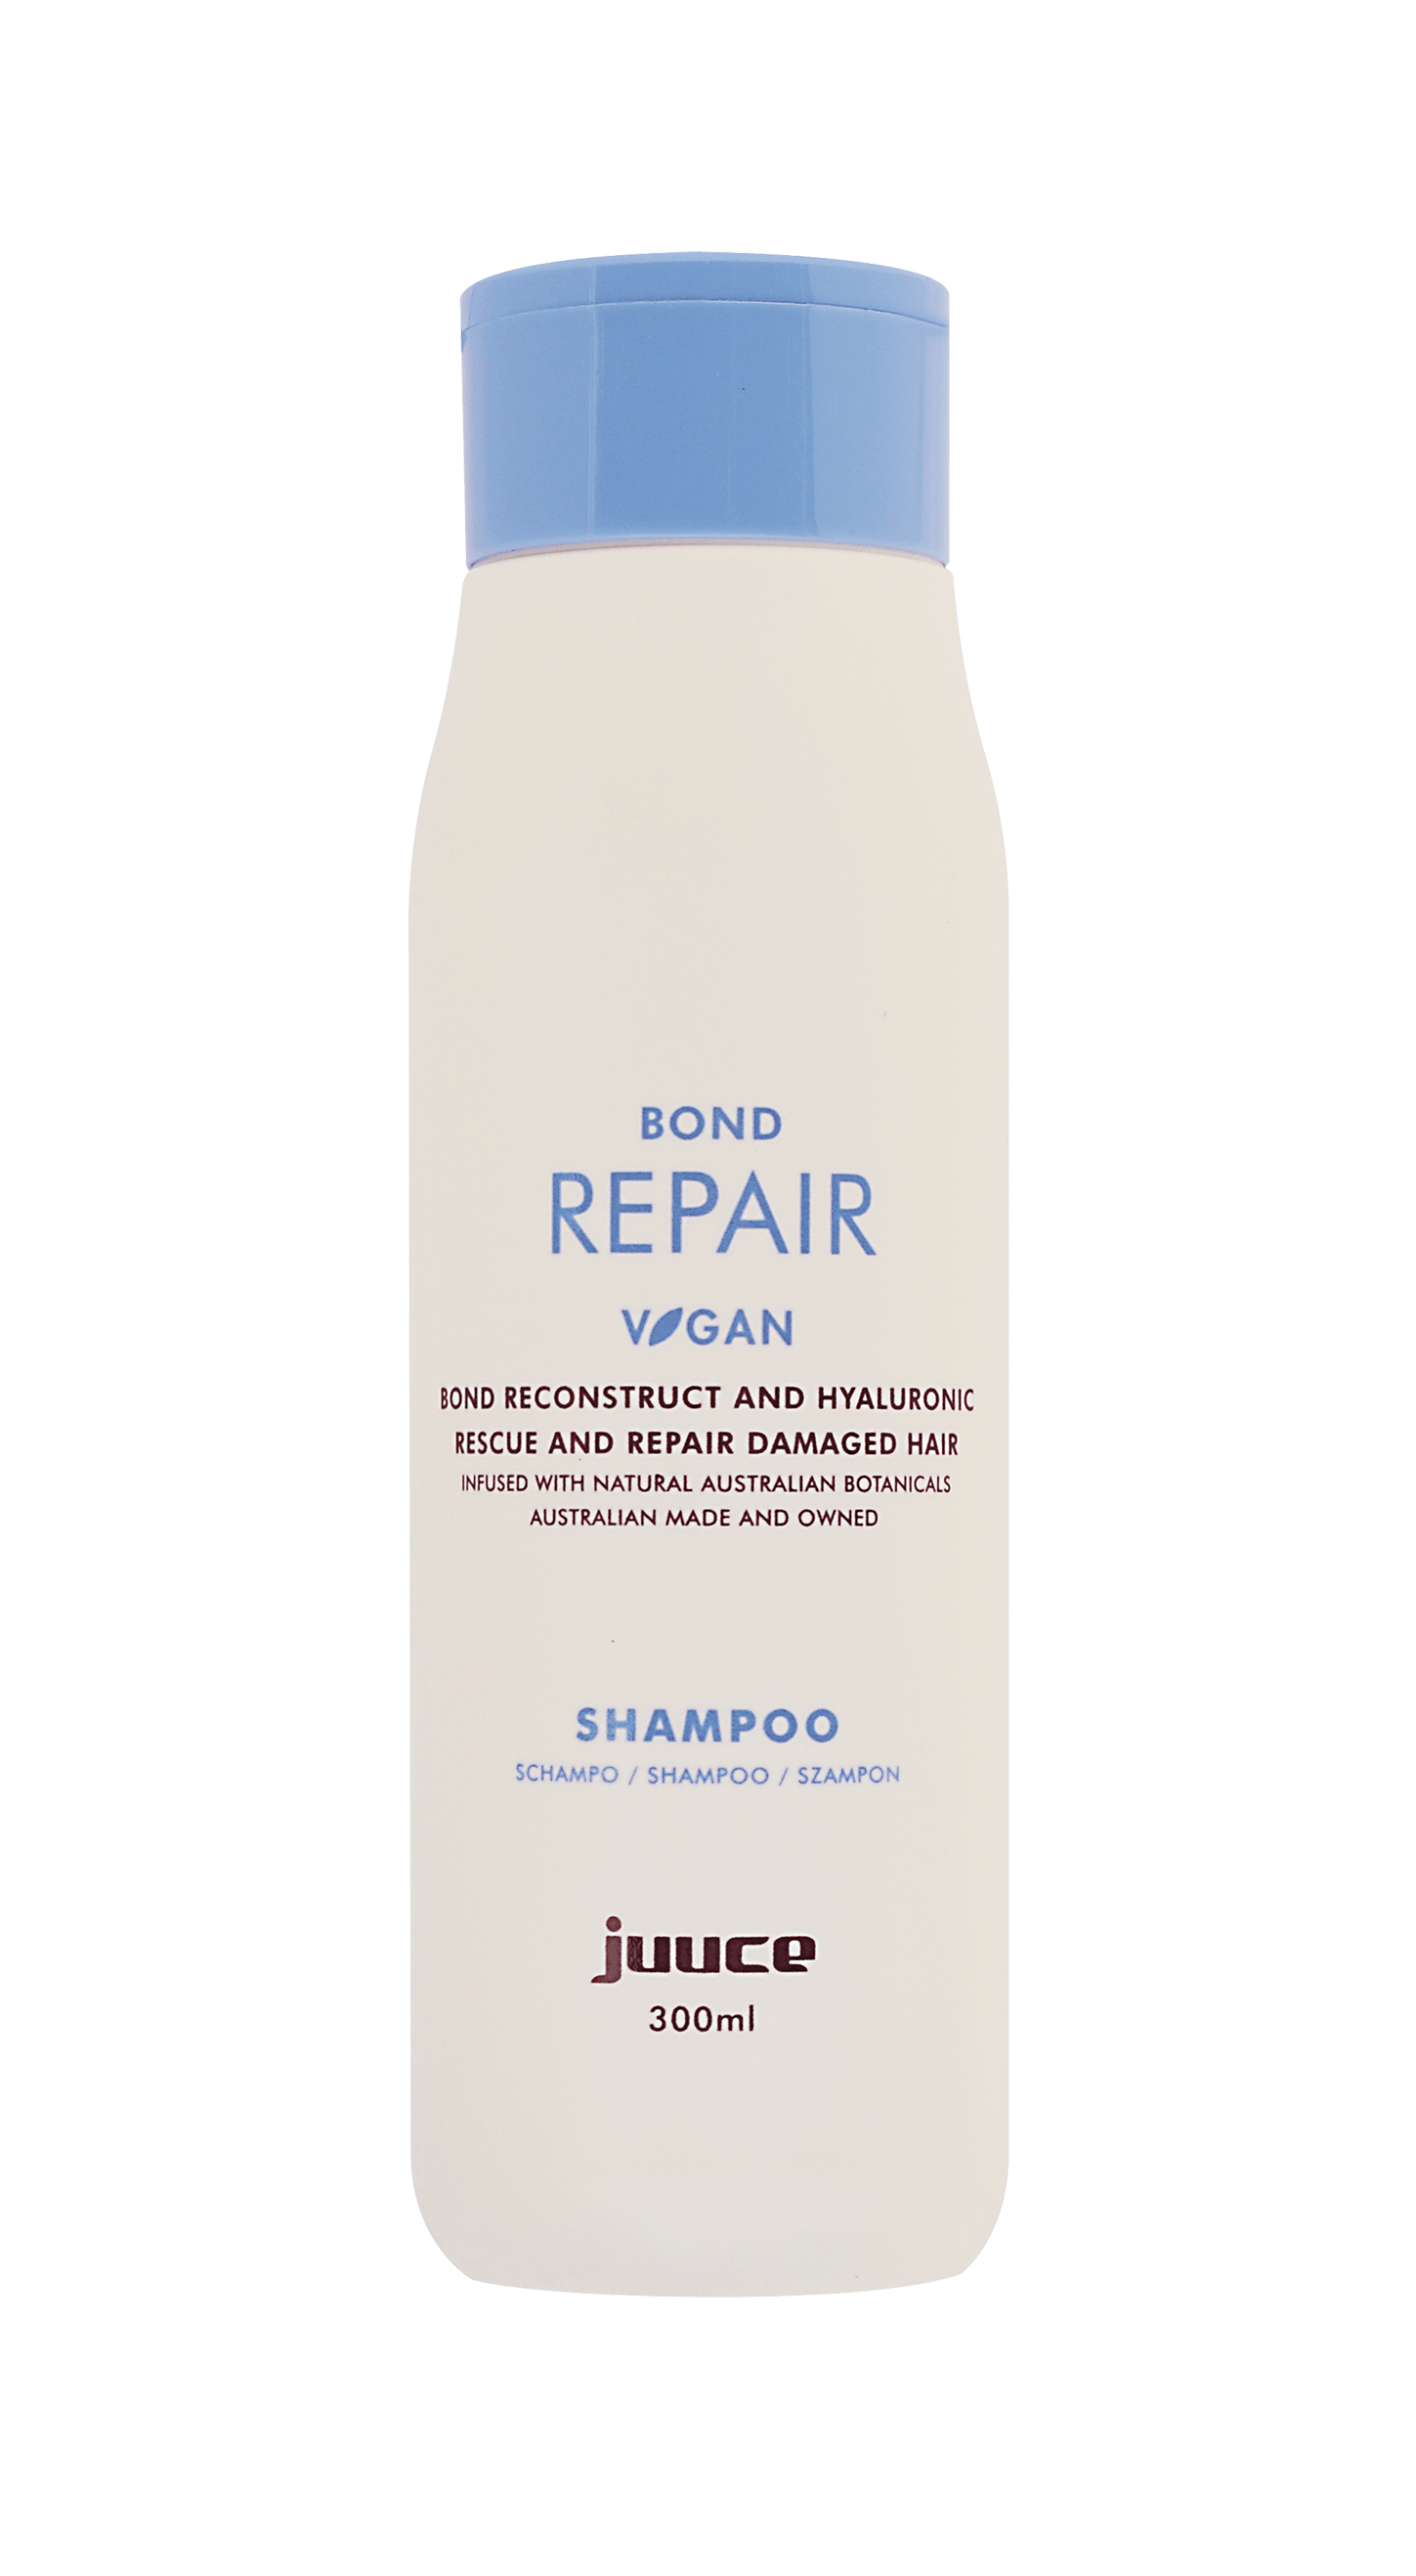 Juuce BOND REPAIR SHAMPOO 300ml (previously Ultra Repair)